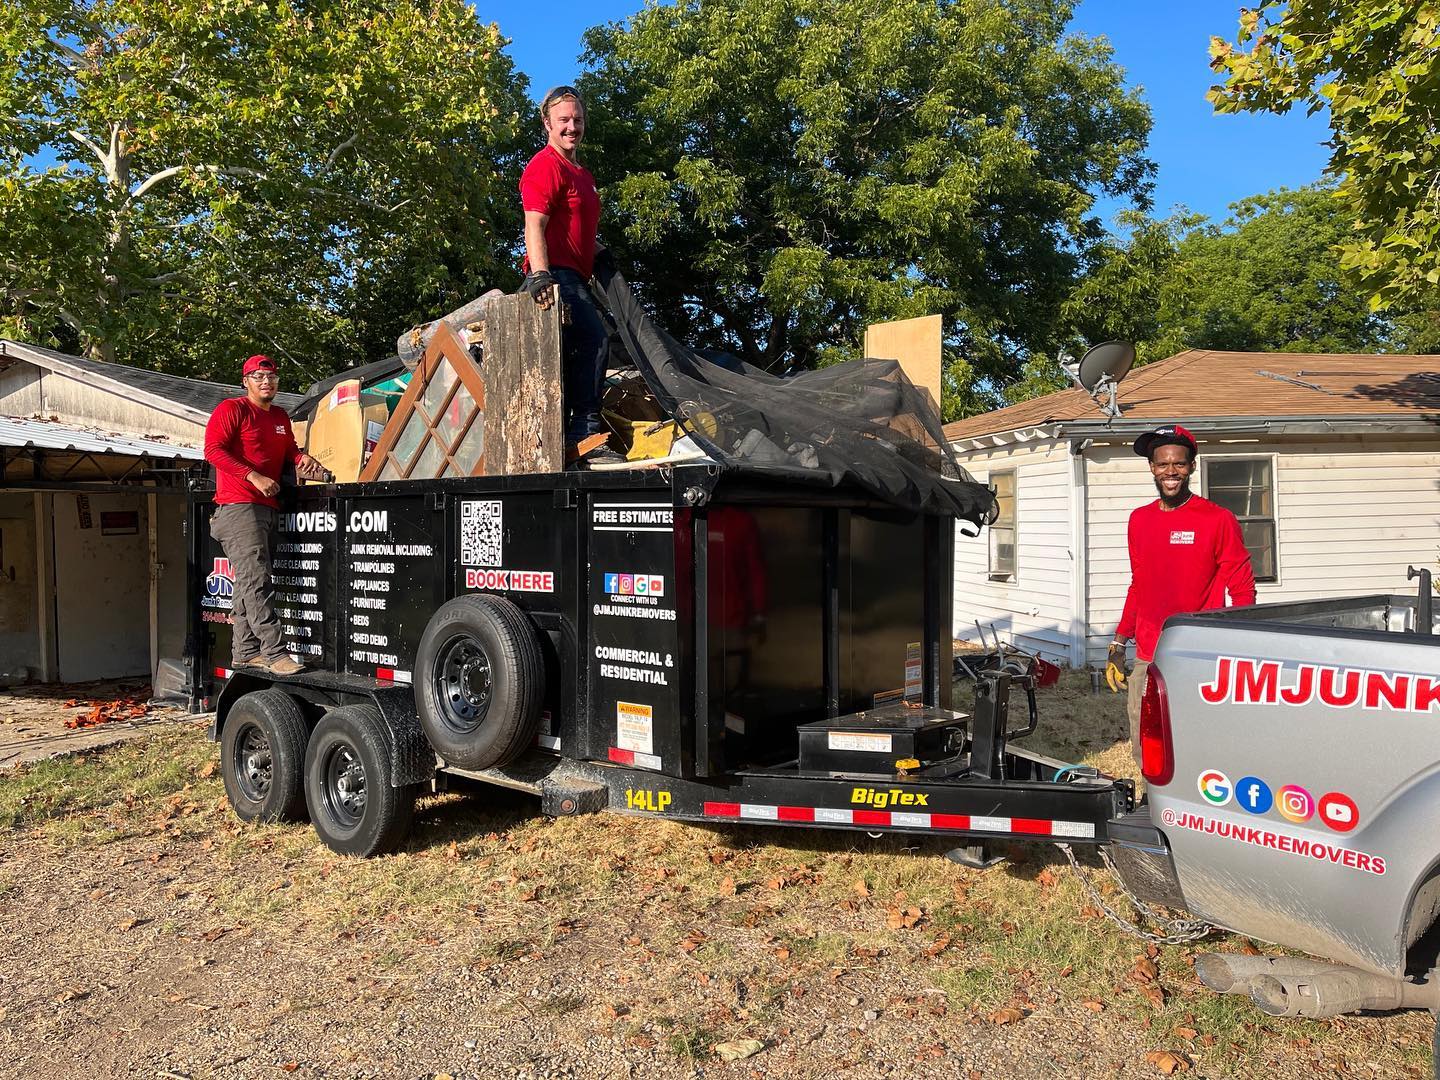 junk removal team